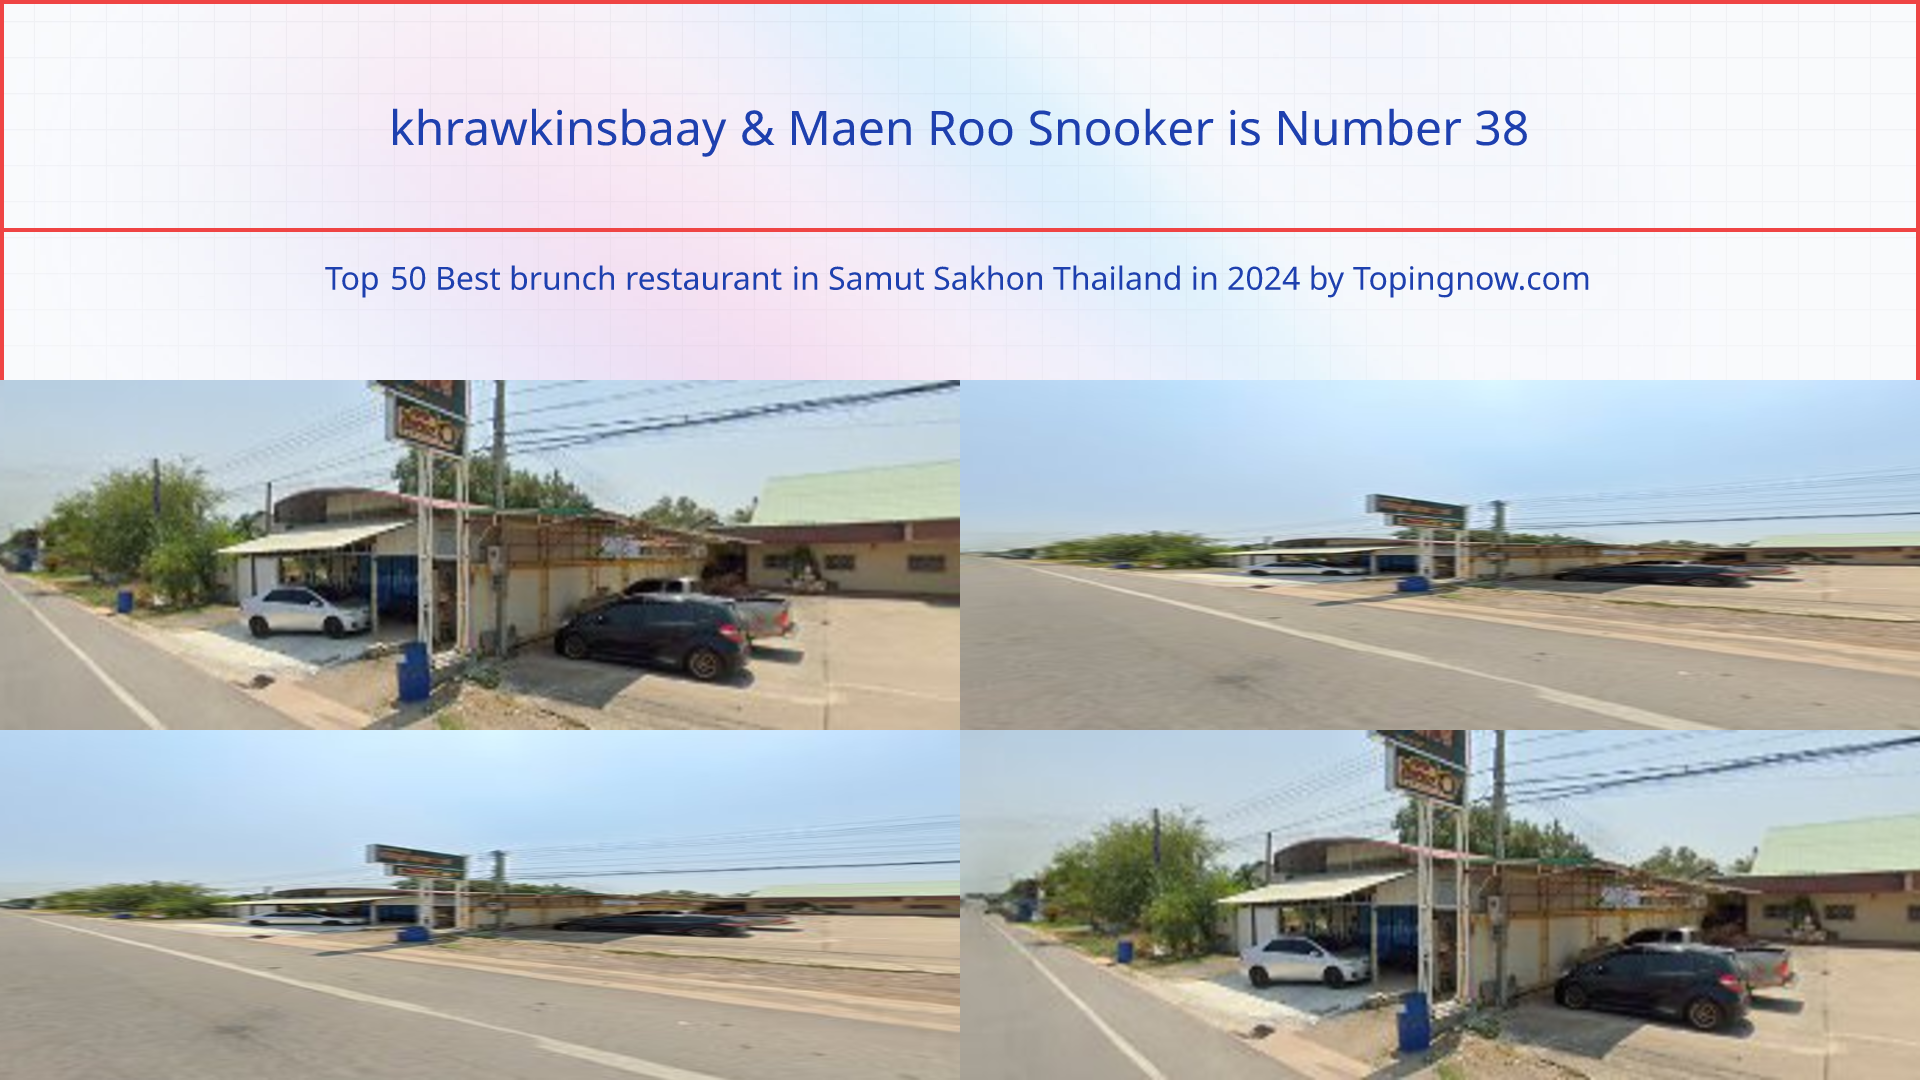 khrawkinsbaay & Maen Roo Snooker: Top 50 Best brunch restaurant in Samut Sakhon Thailand in 2024